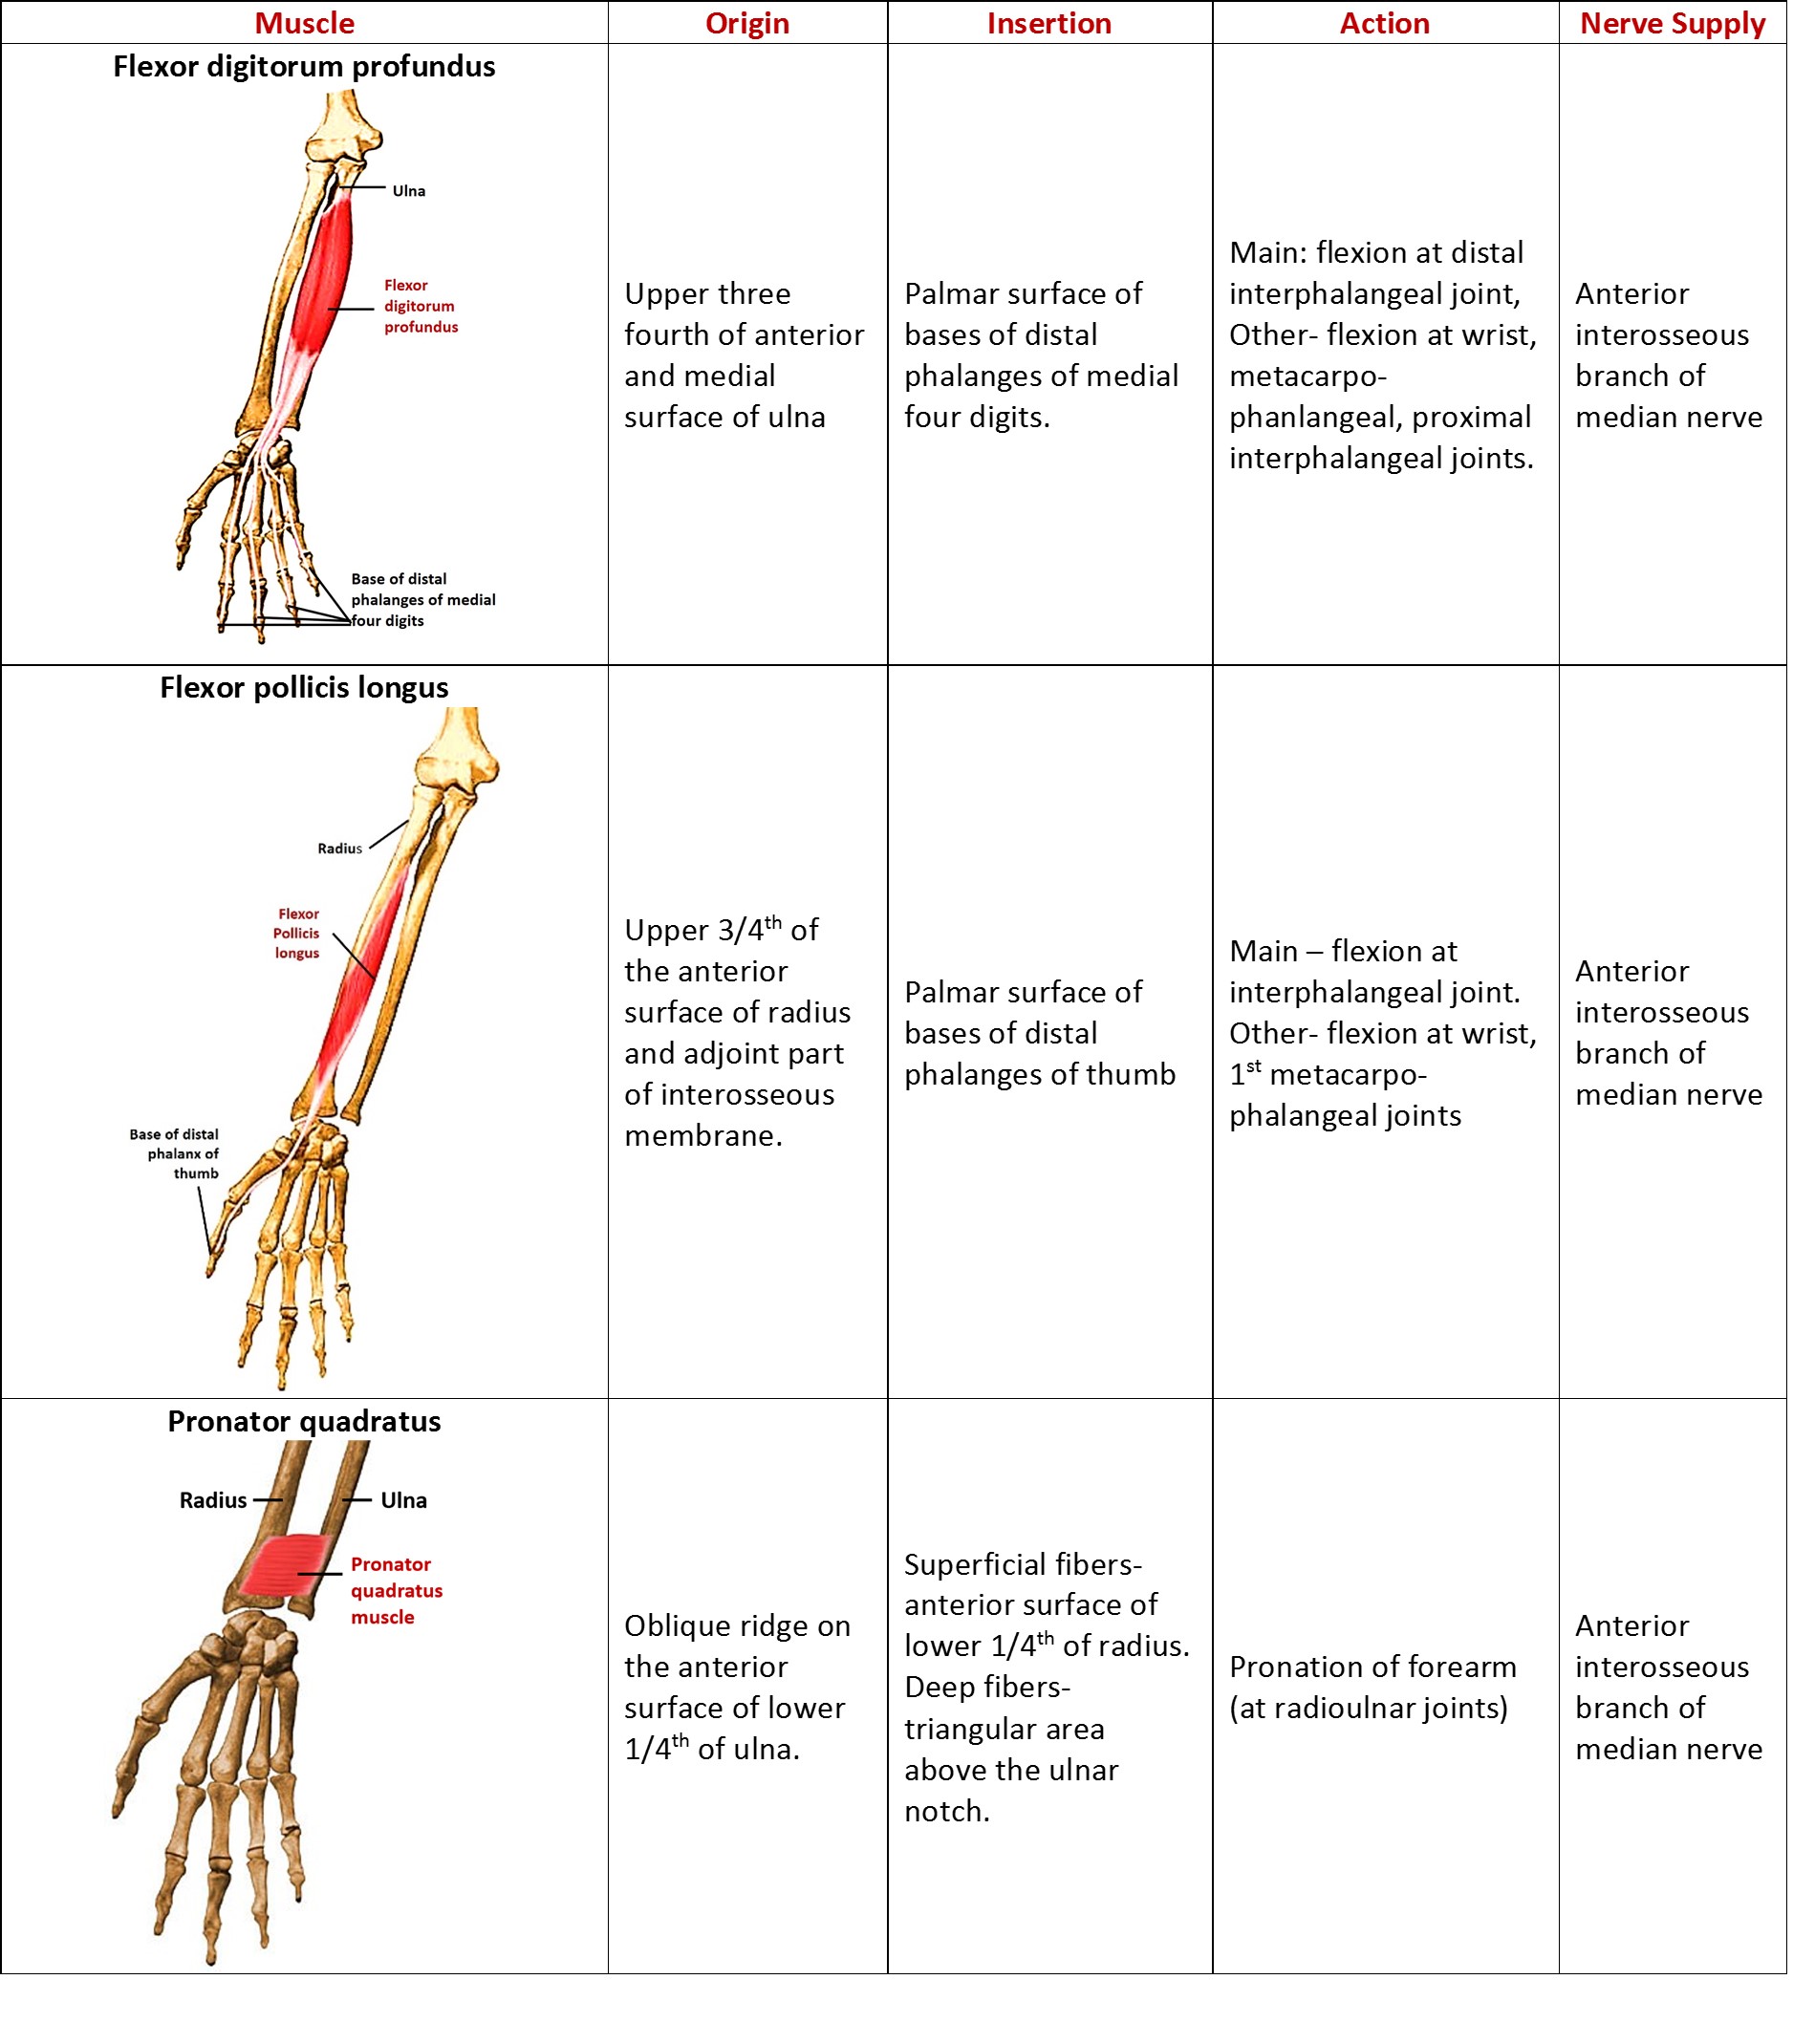 deep flexor muscles of flexor compartment of forearm